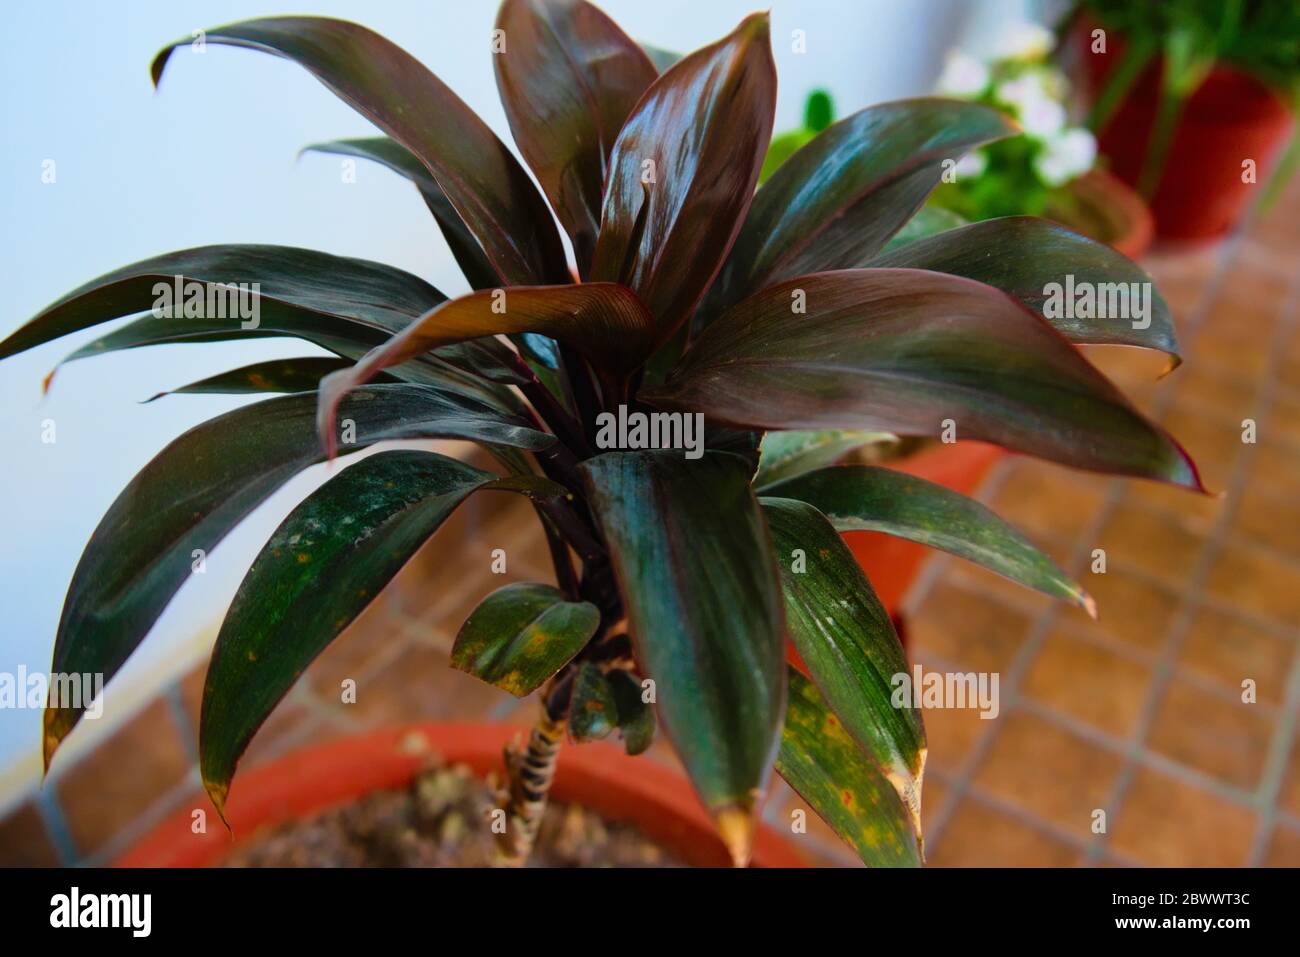 A Cornstalk dracaena plant pot. Stock Photo